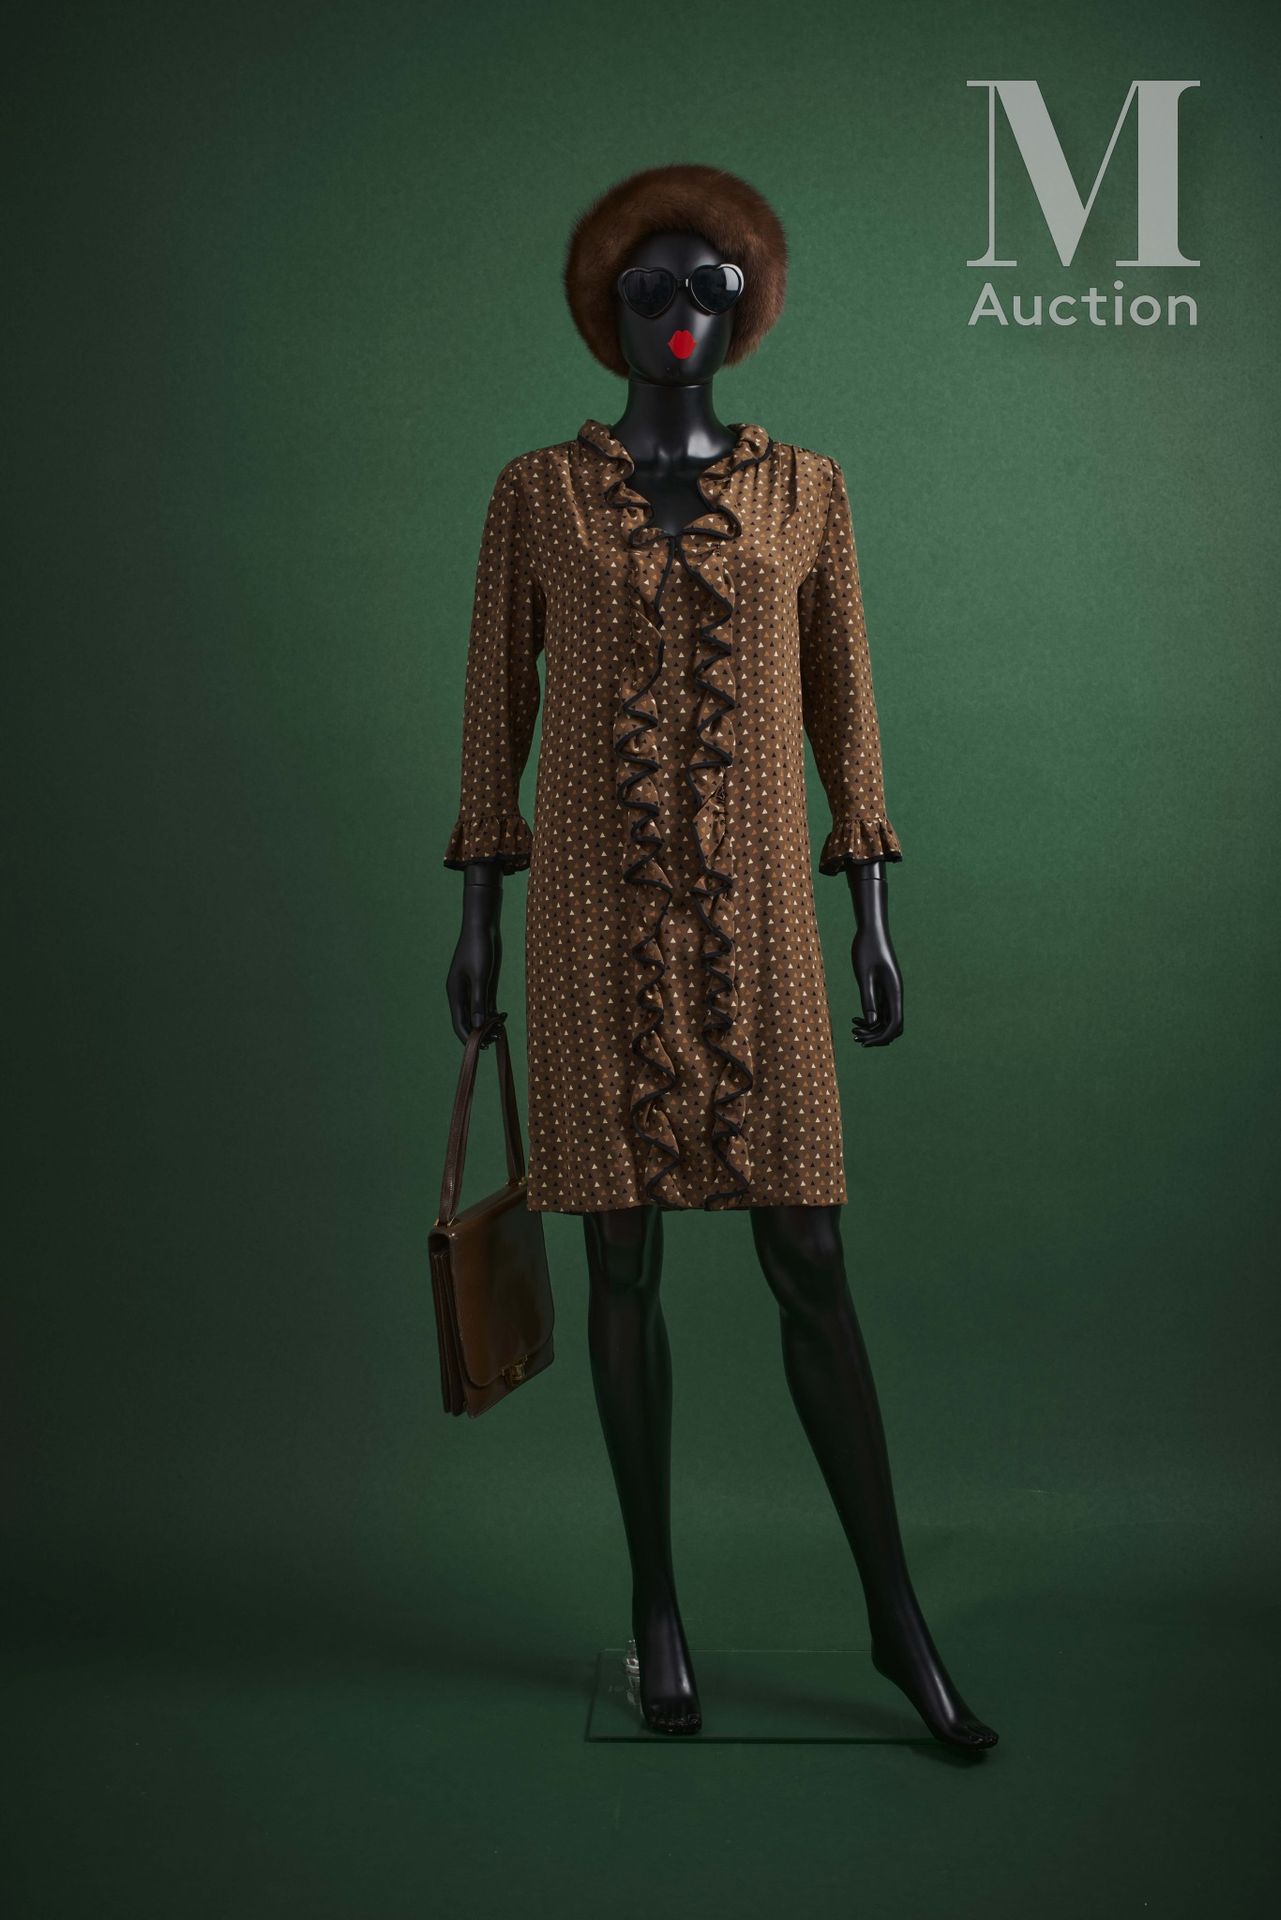 CARVEN (HAUTE-COUTURE) - 1980'S 荷叶边连衣裙

印花丝质绉绸，在榛子色背景上装饰有小三角形，并有黑色斜面装订。

象牙色的爪子，&hellip;